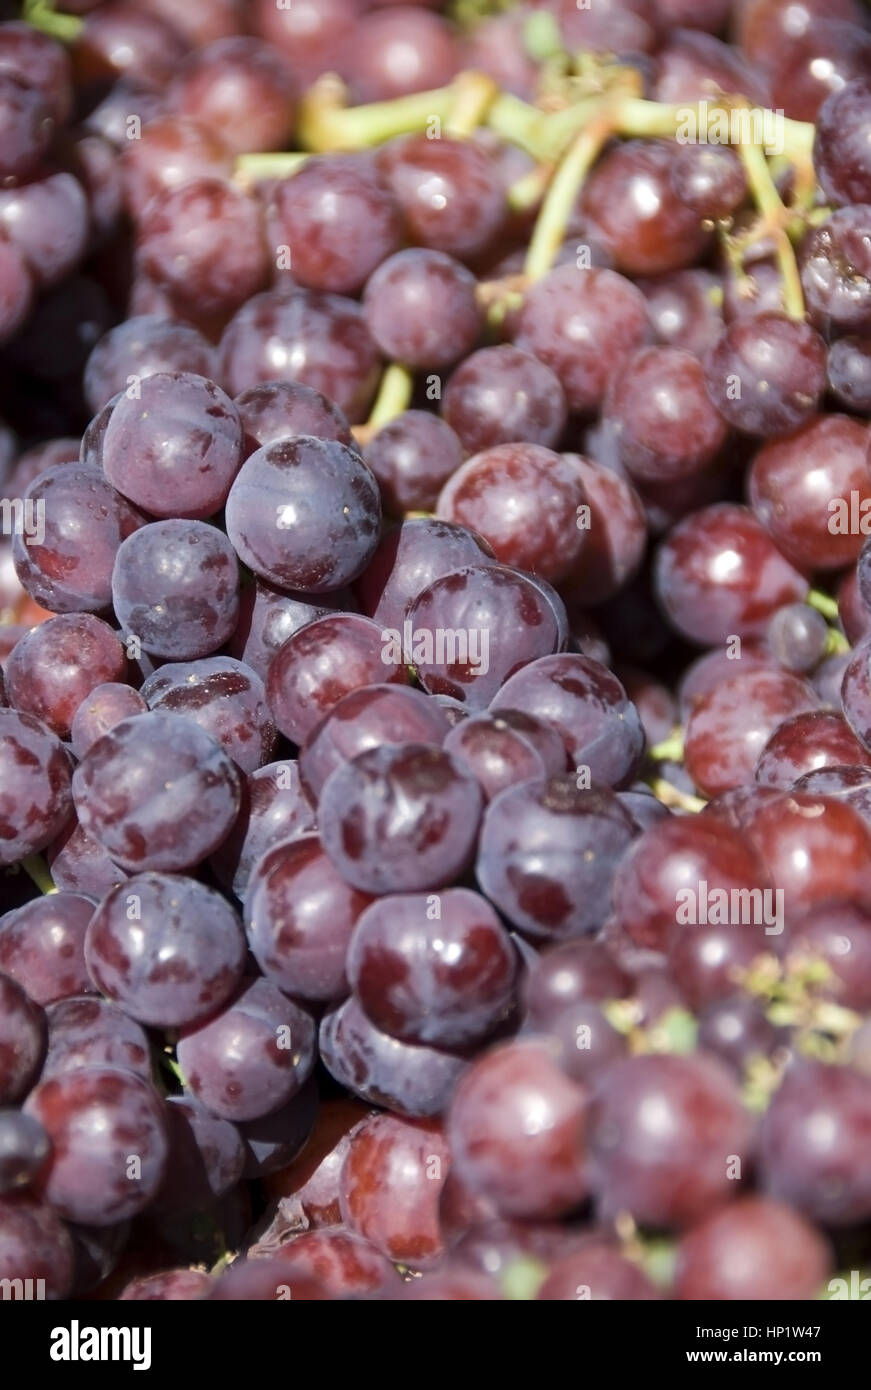 Weintrauben - grapes Stock Photo